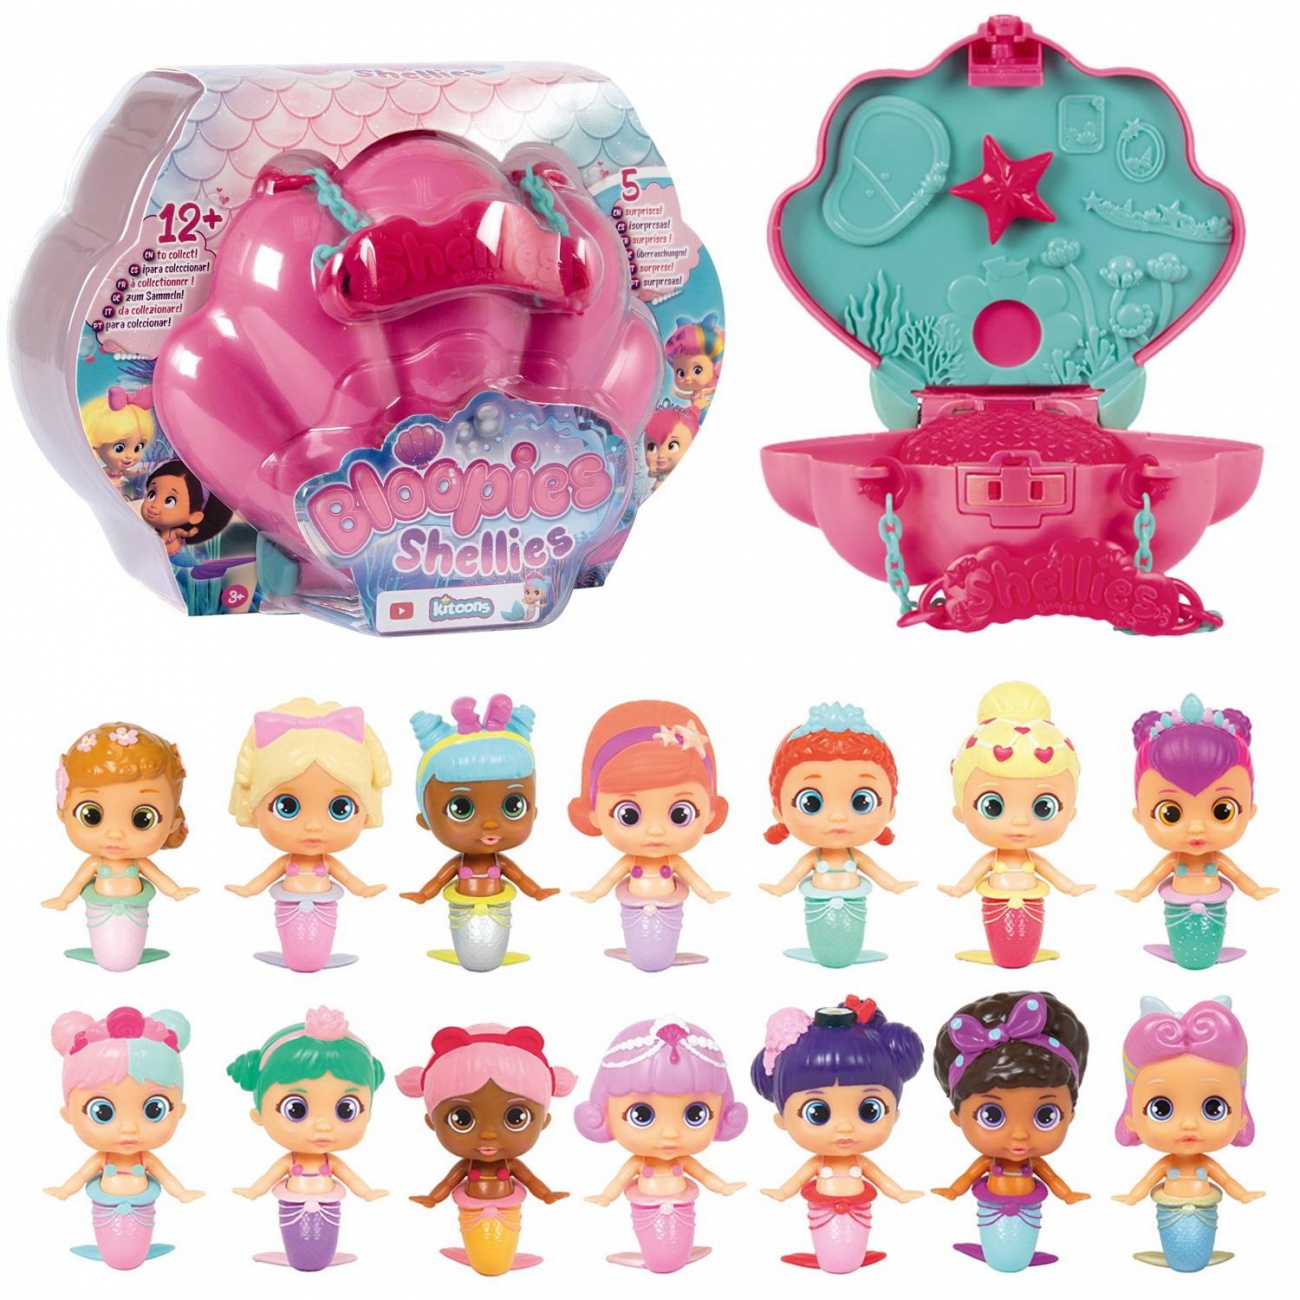 Кукла IMC Toys Bloopies Shellies Русалочка 14 видов в коллекции, розовая ракушка 91894/91917/1-p